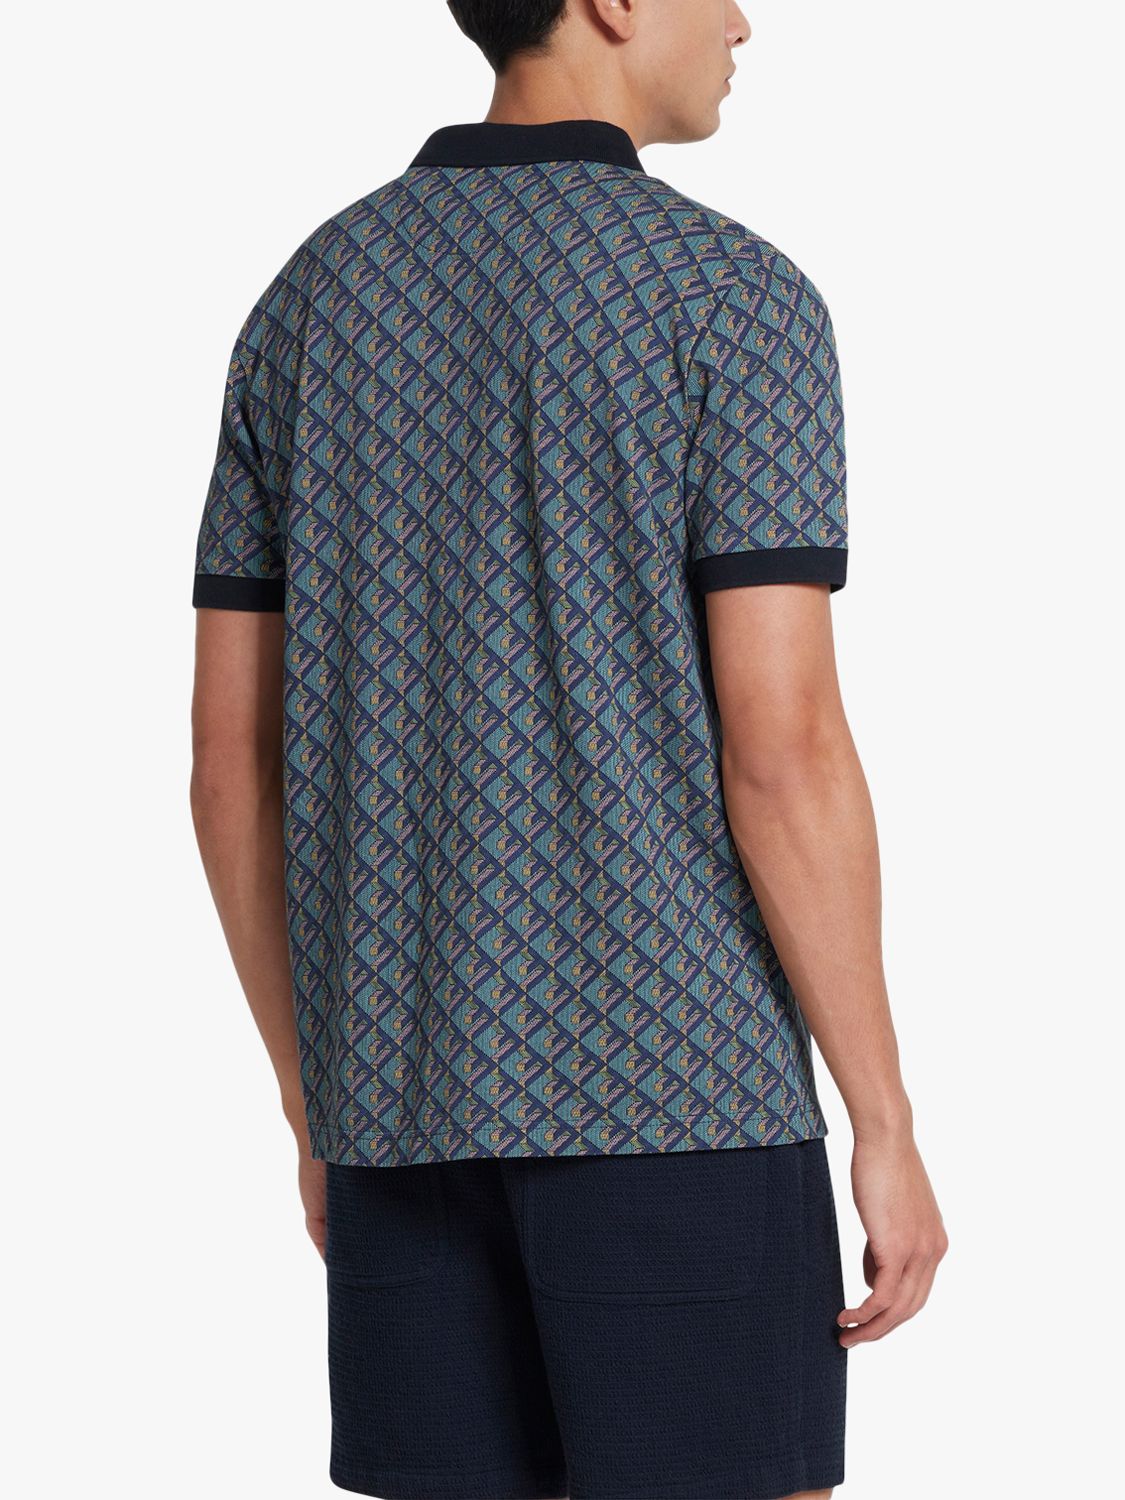 Farah Heydon Geometric Print Short Sleeve Polo Shirt, Multi, L